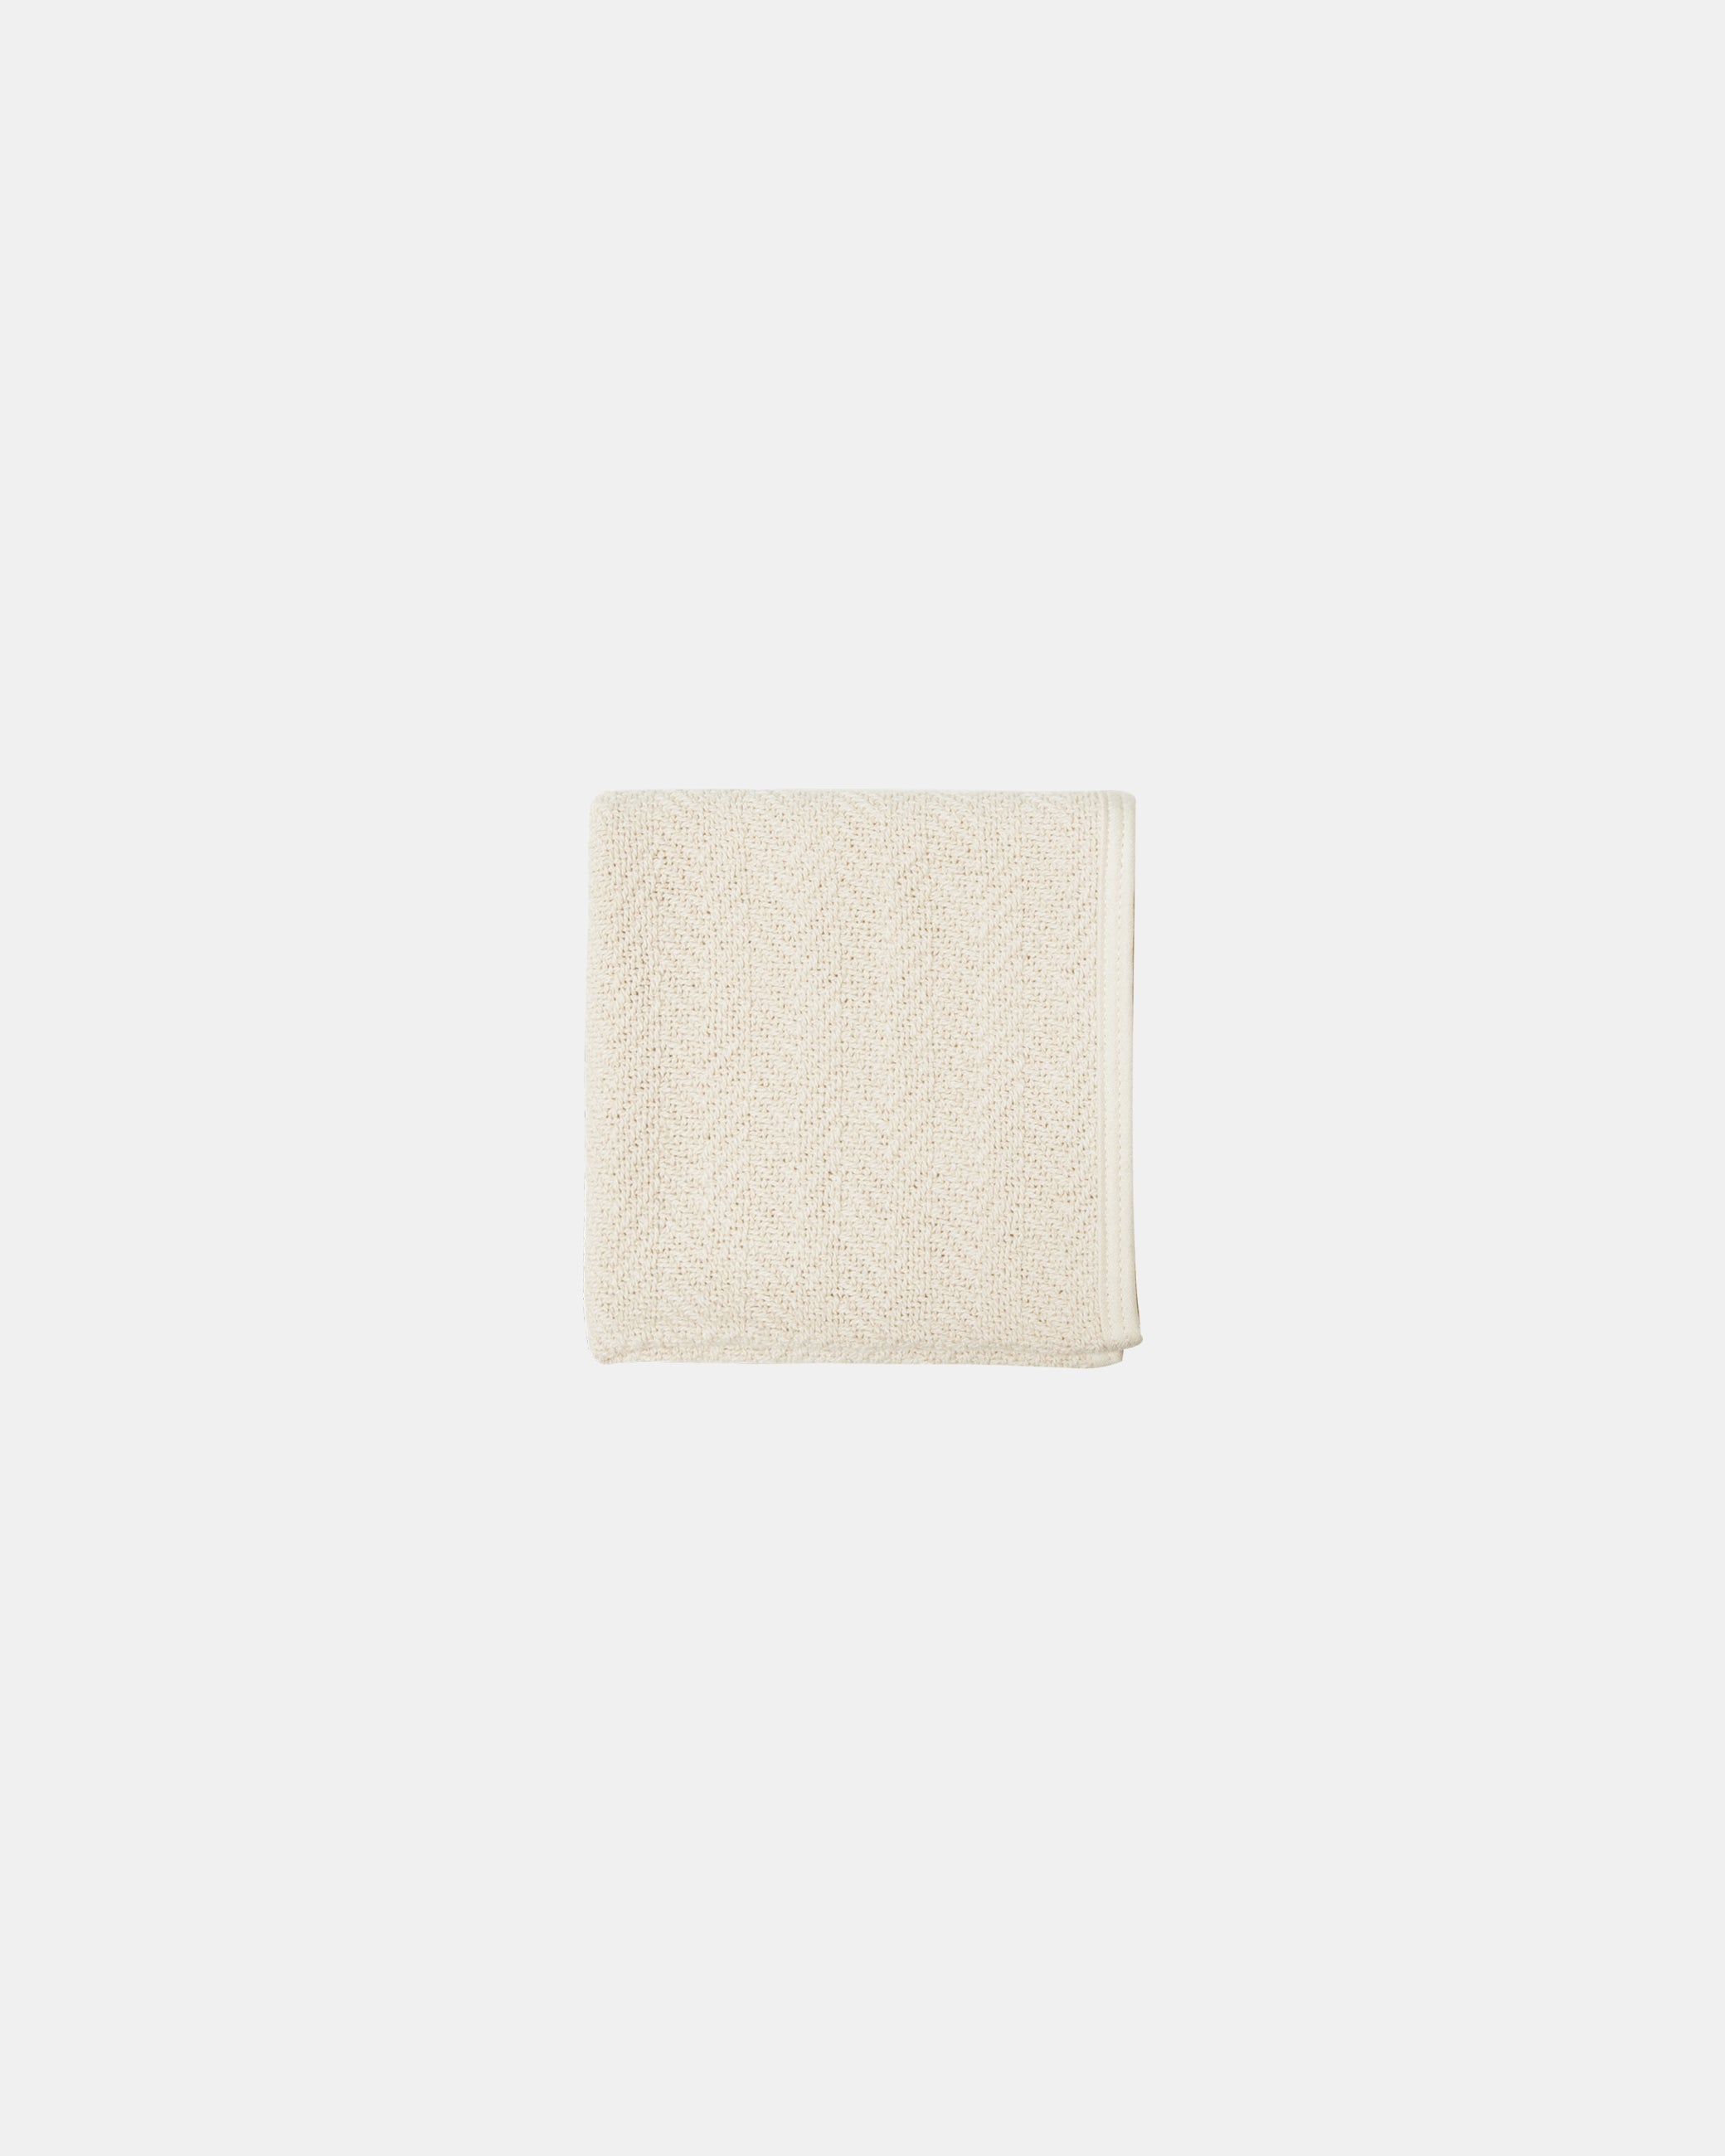 Herringbone Cotton -wash cloth<br>Fog Linen